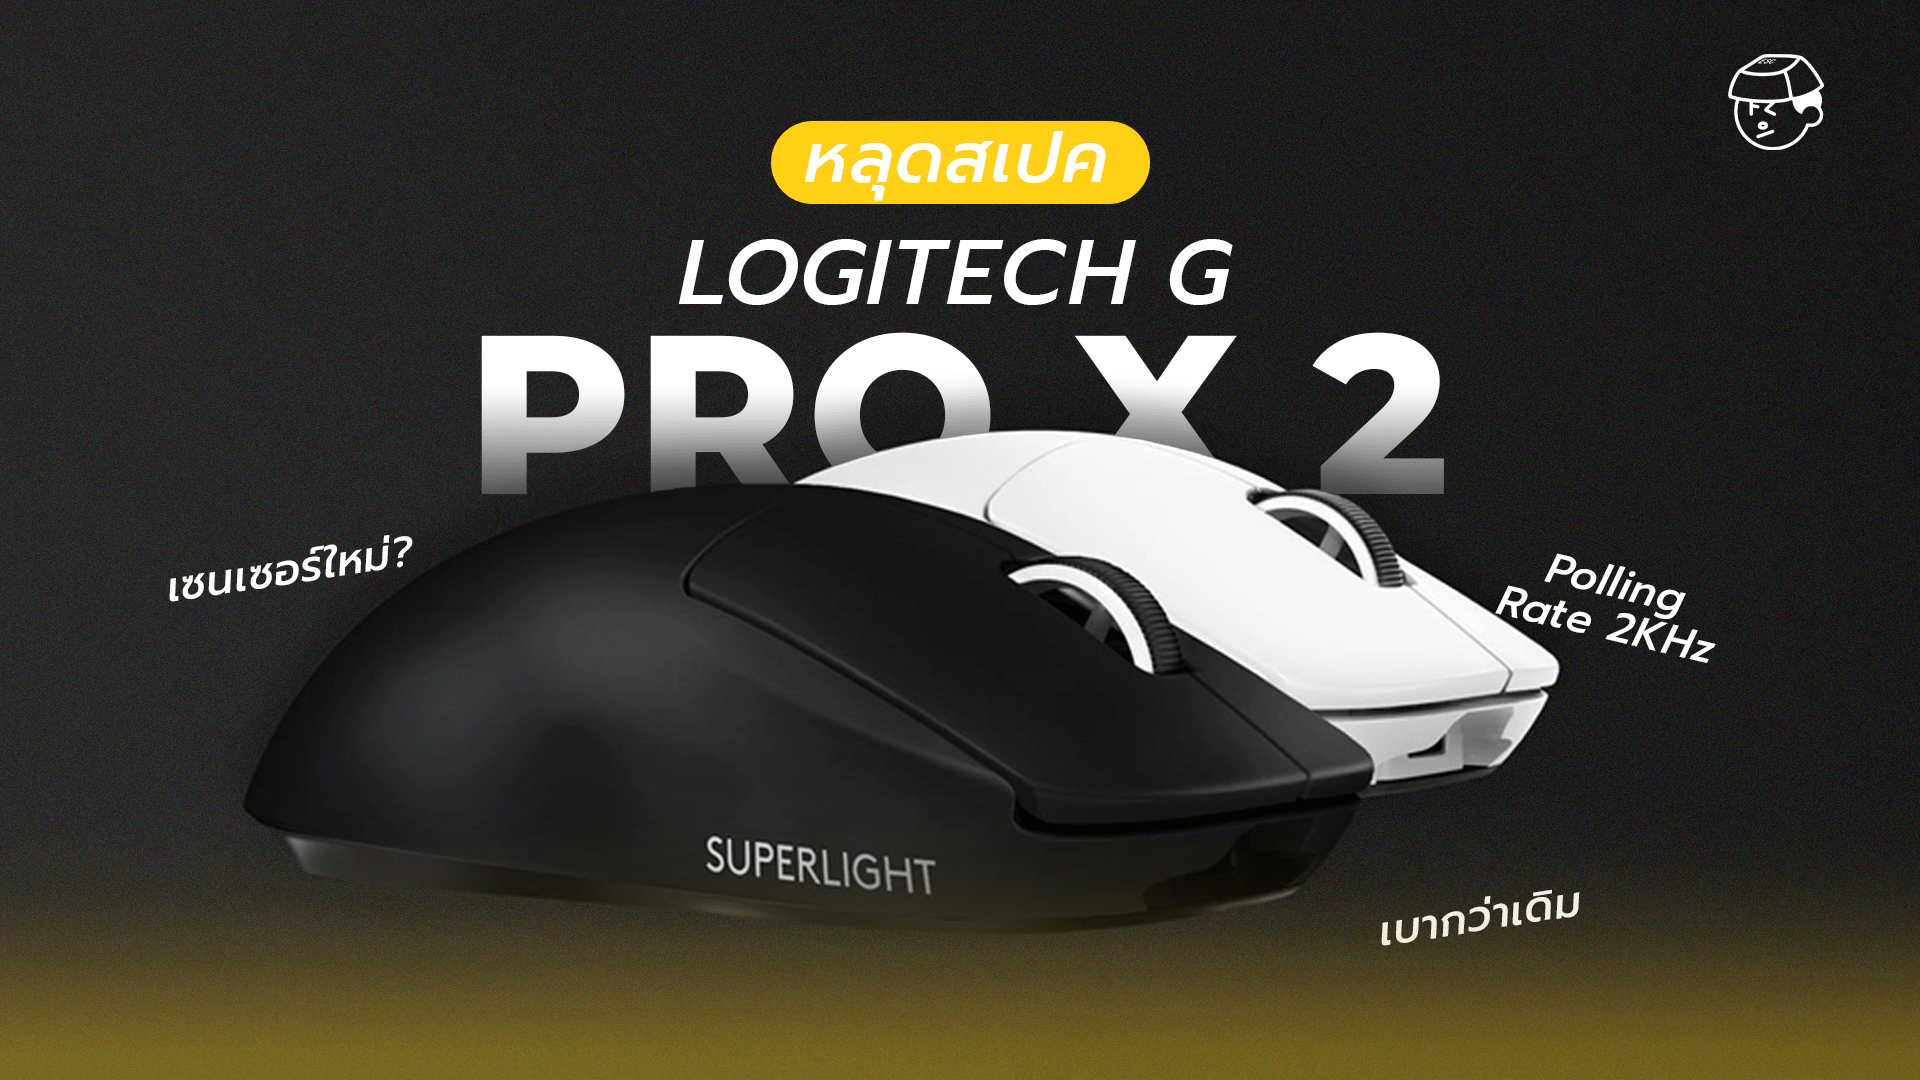 Logitech G Pro X Superlight เมาส์ Lightspeed เบาสุดในรุ่น